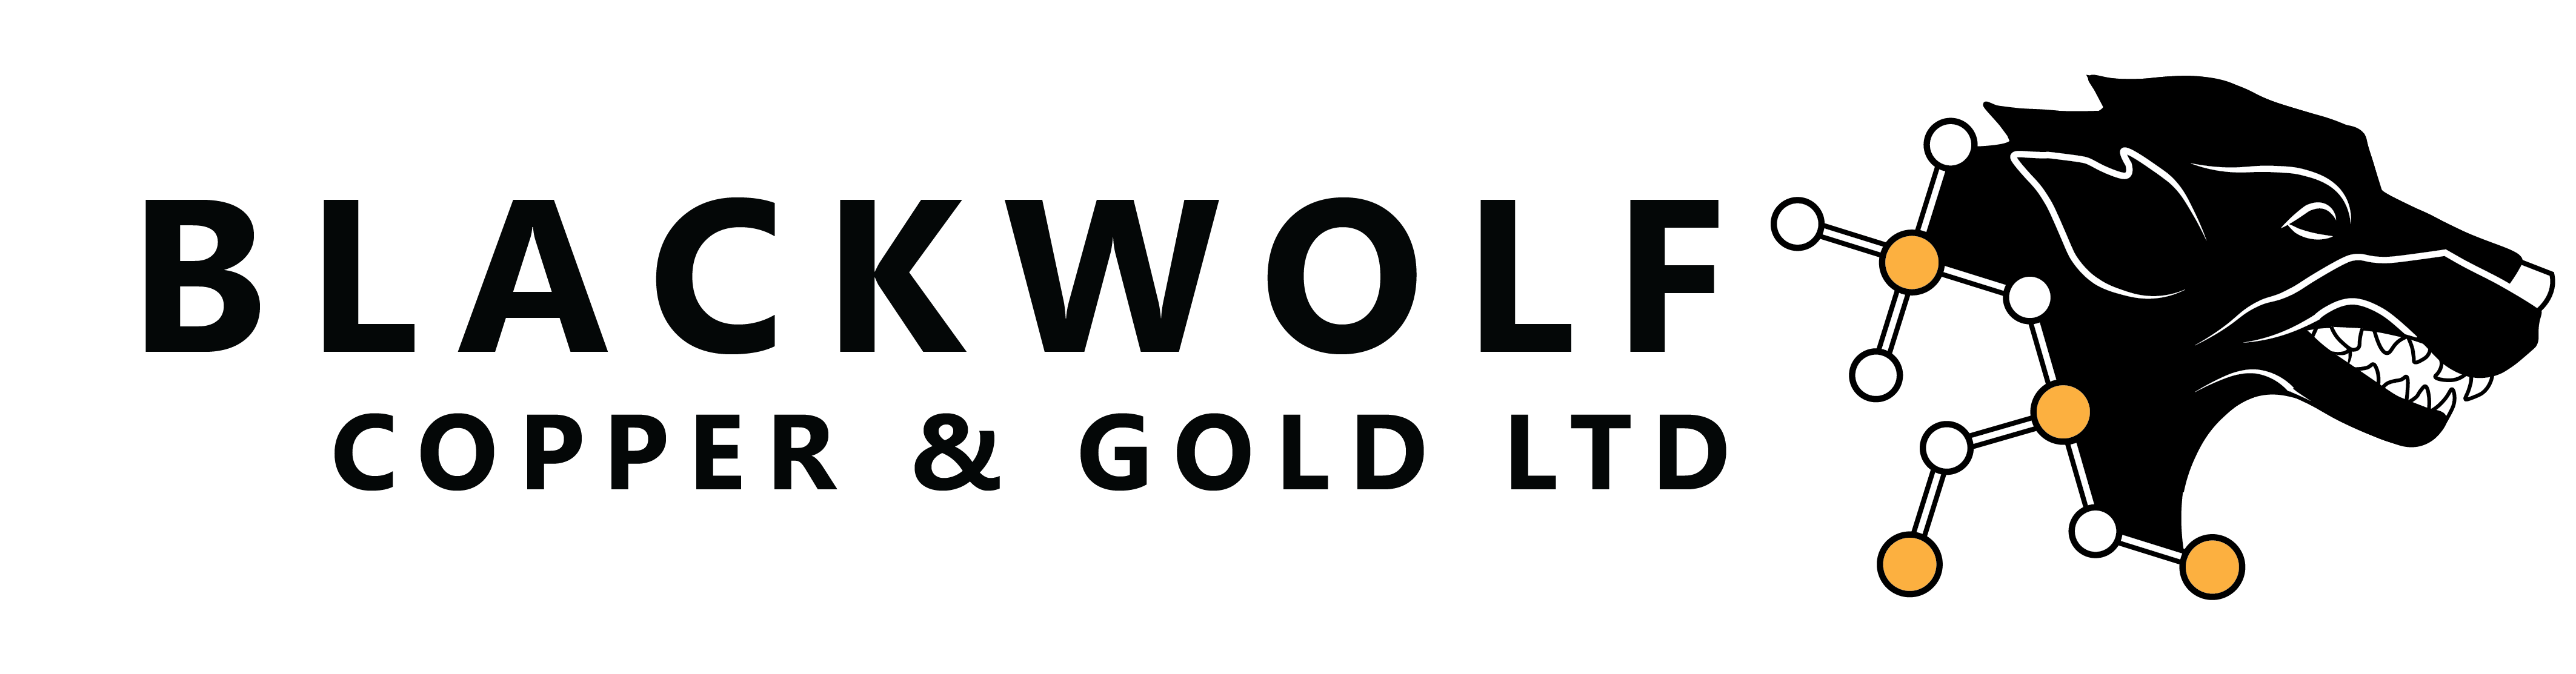 Blackwolf Copper & Gold Ltd.